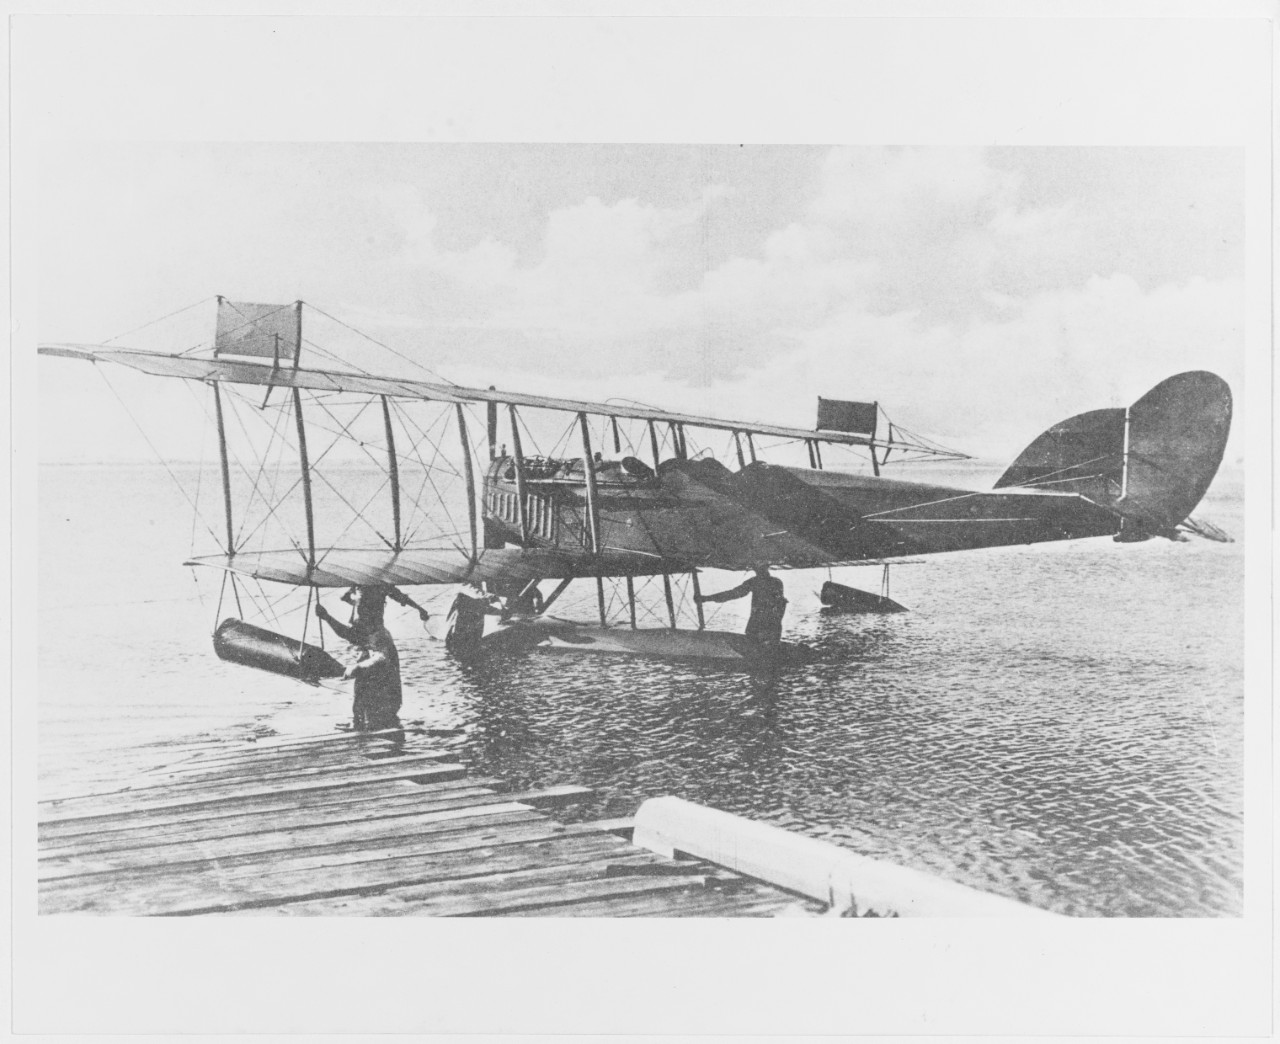 CURTISS N-9 Training Plane at U.S.N. Aeronautic Station, Pensacola, Florida, November 1916